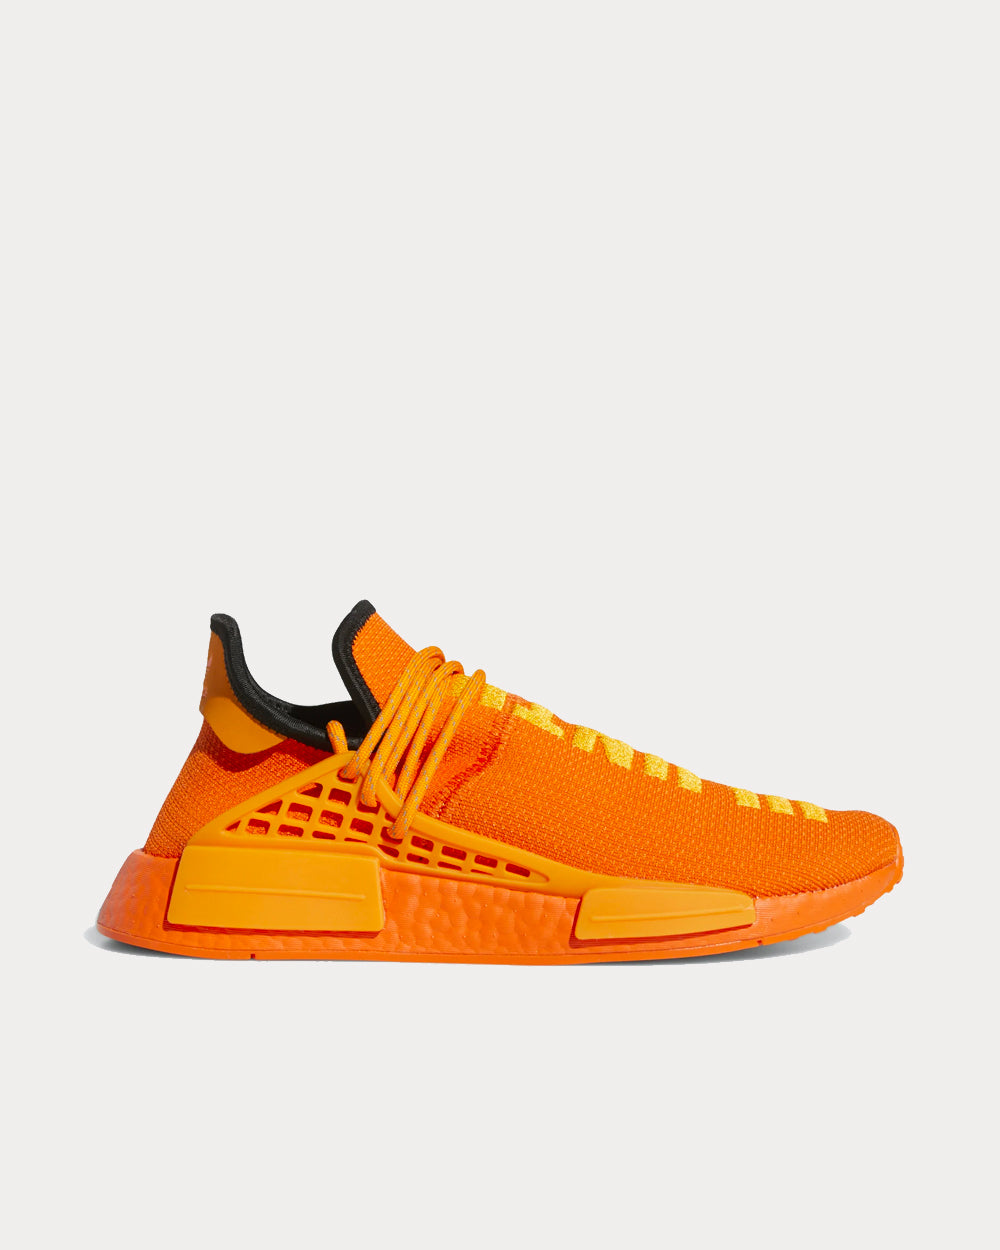 Adidas x Pharrell Williams - HU NMD Orange / Bright Orange / Core Black Low Top Sneakers